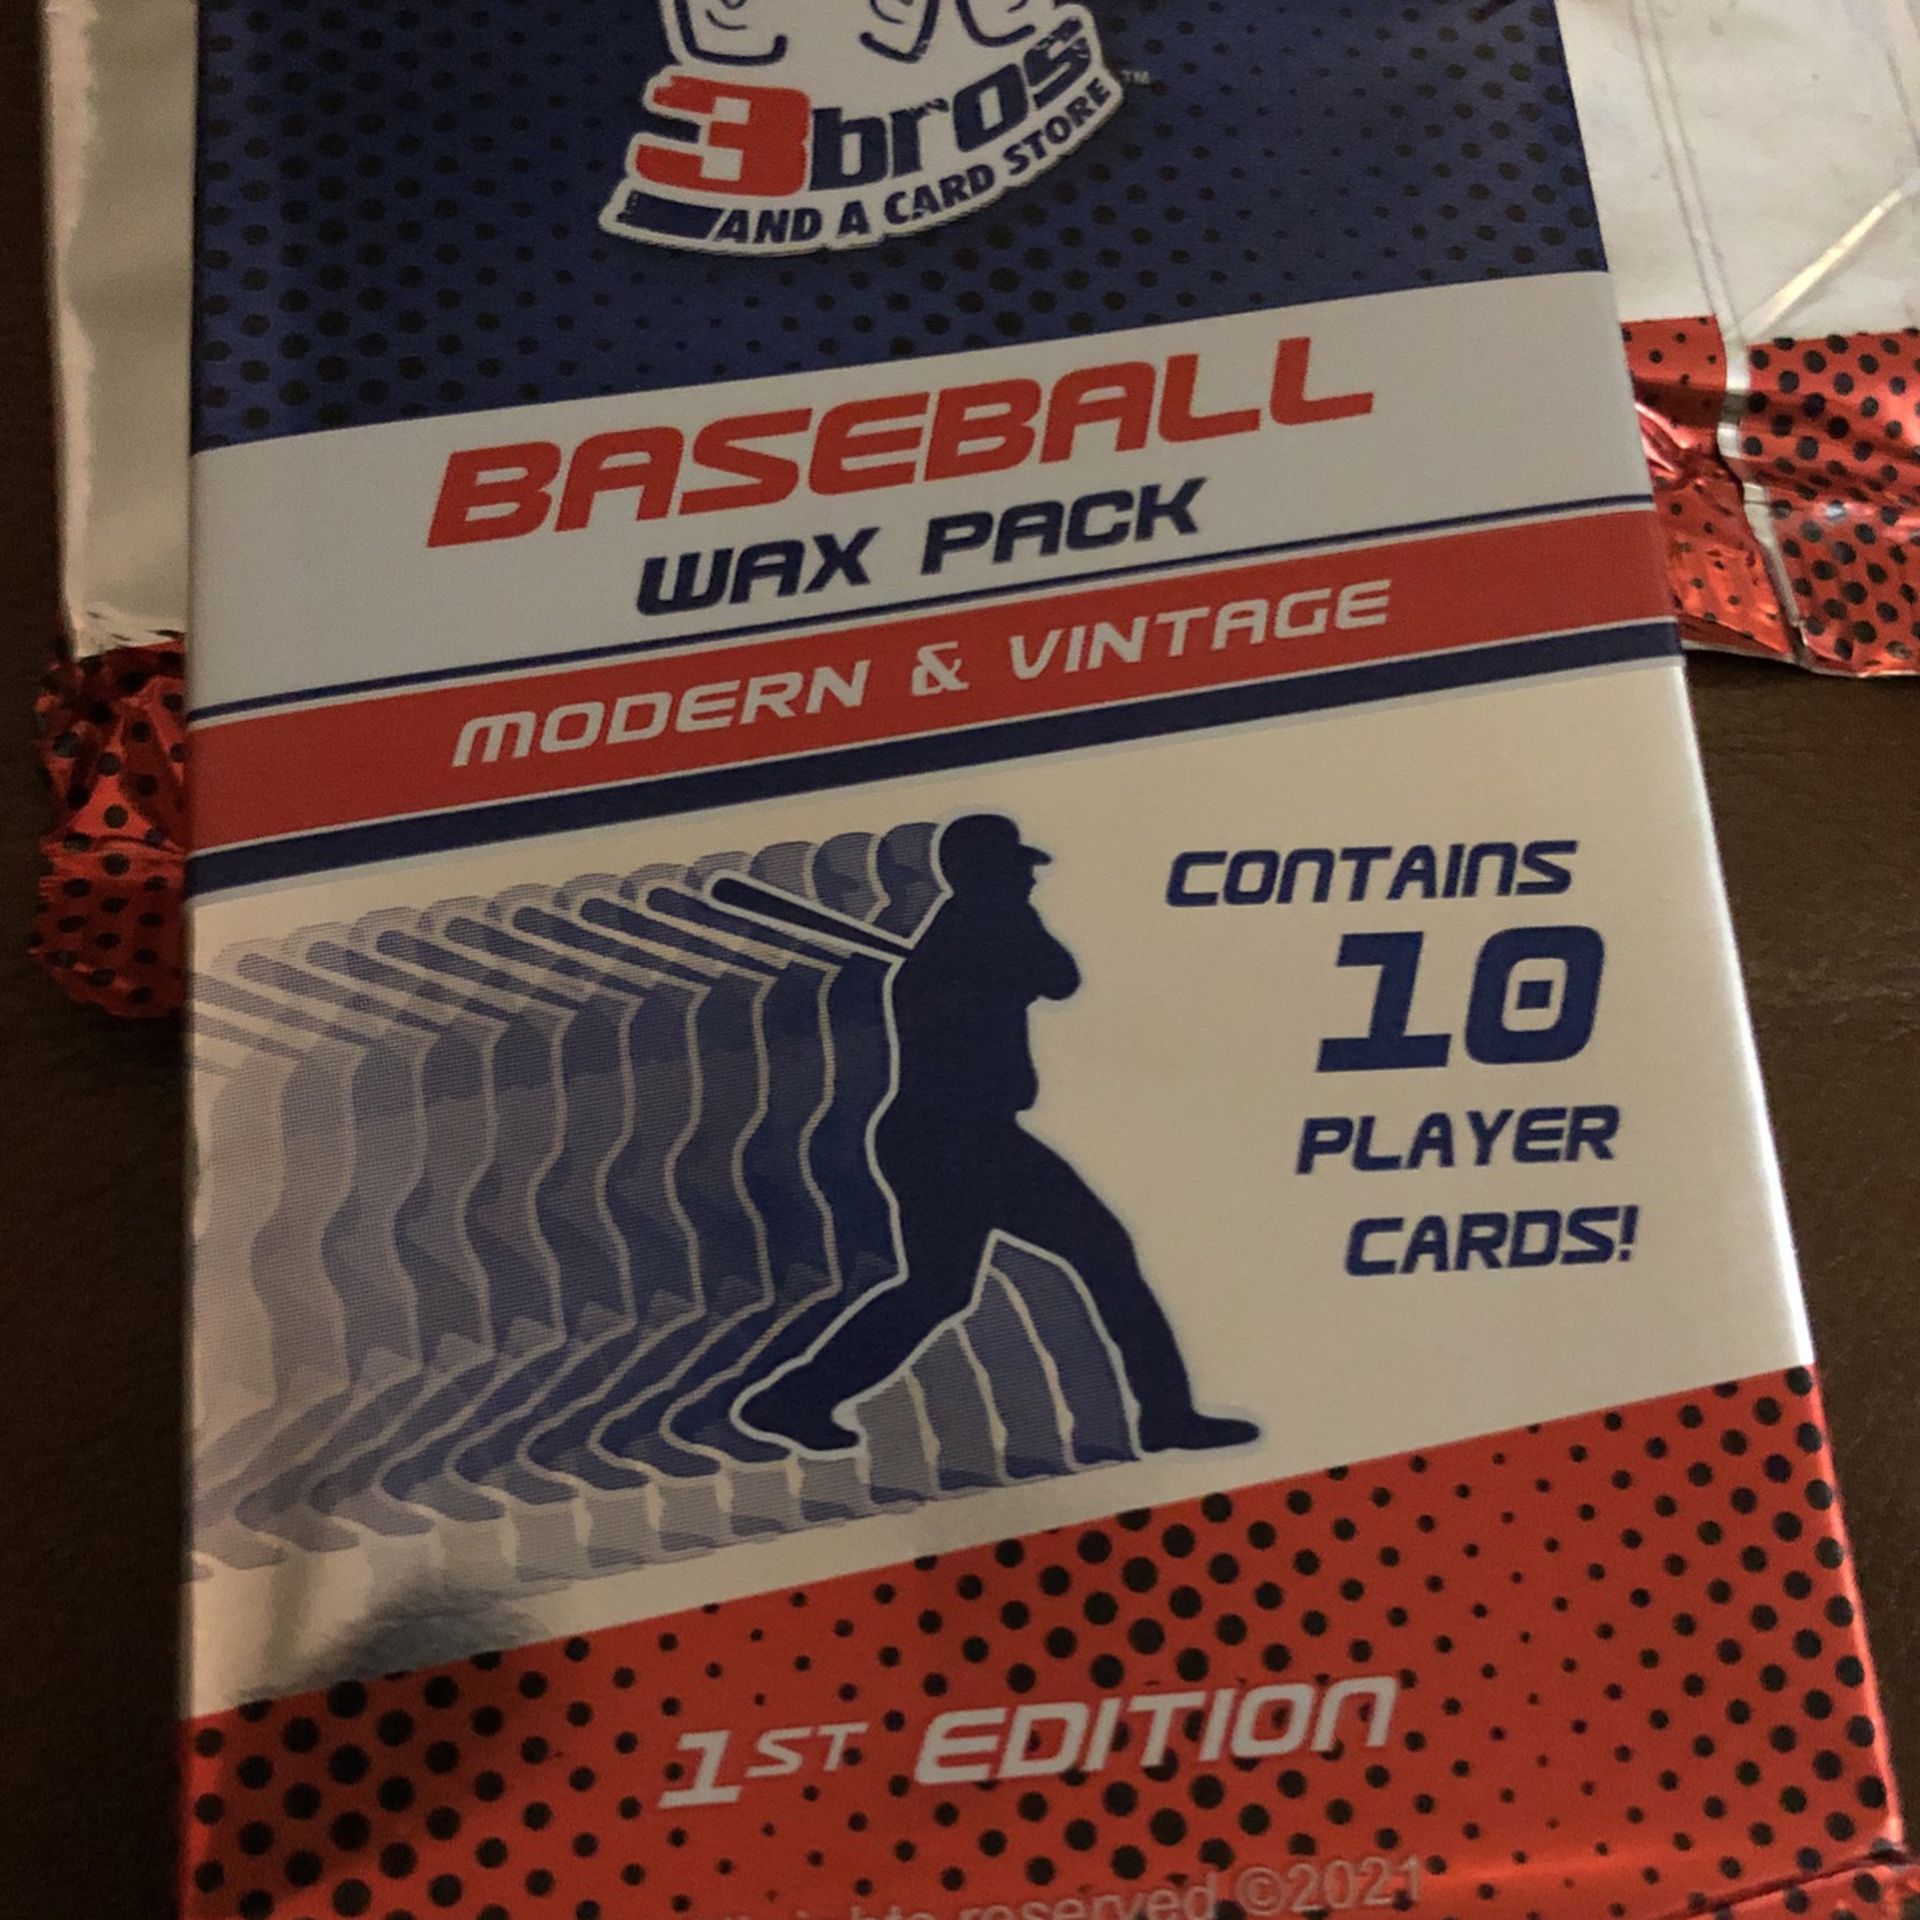 3 Bros And a card store Baseball wax Packs